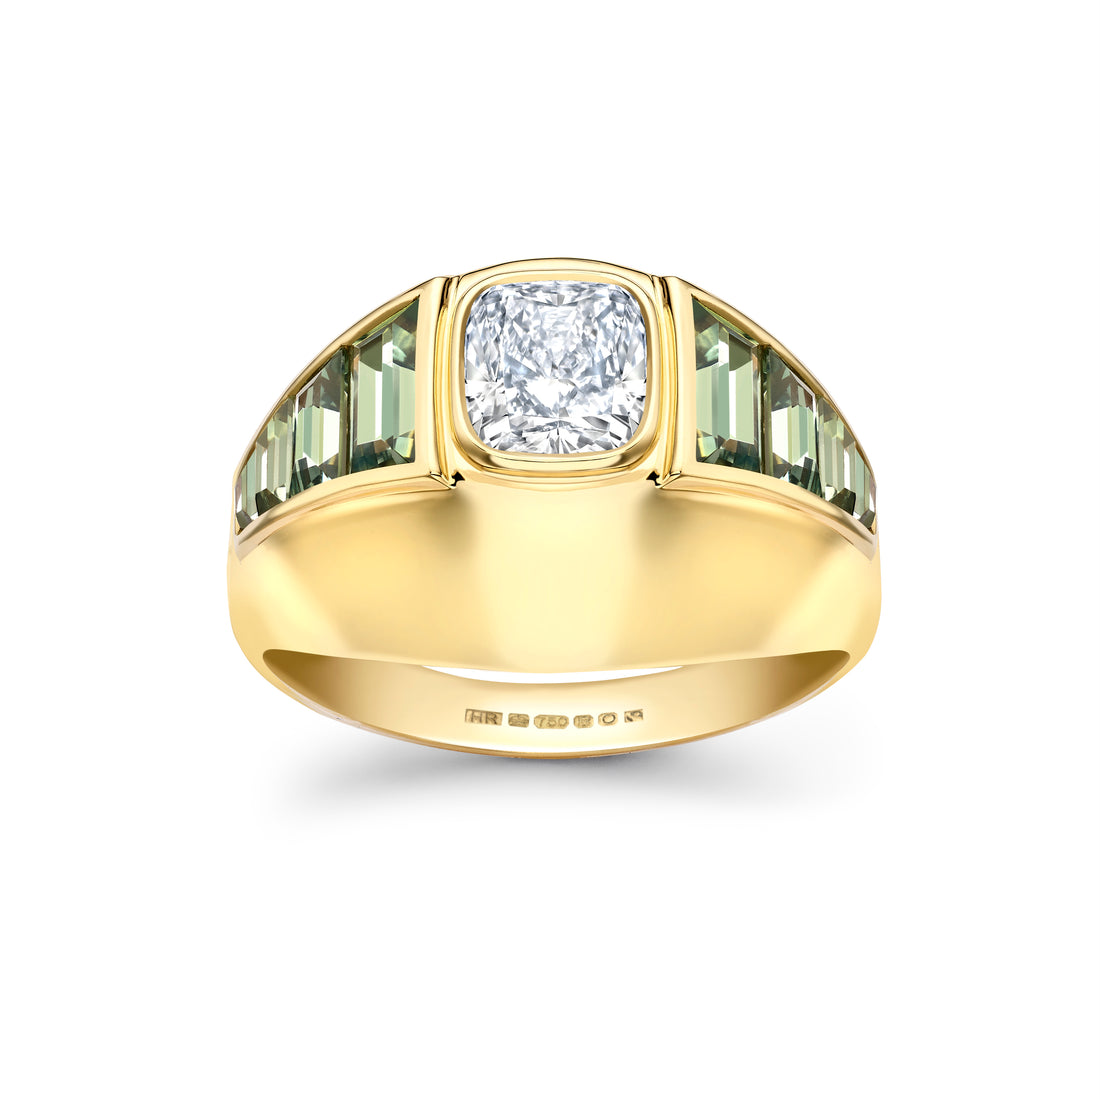  Diamond & Green Sapphire Ring by Hattie Rickards | The Cut London